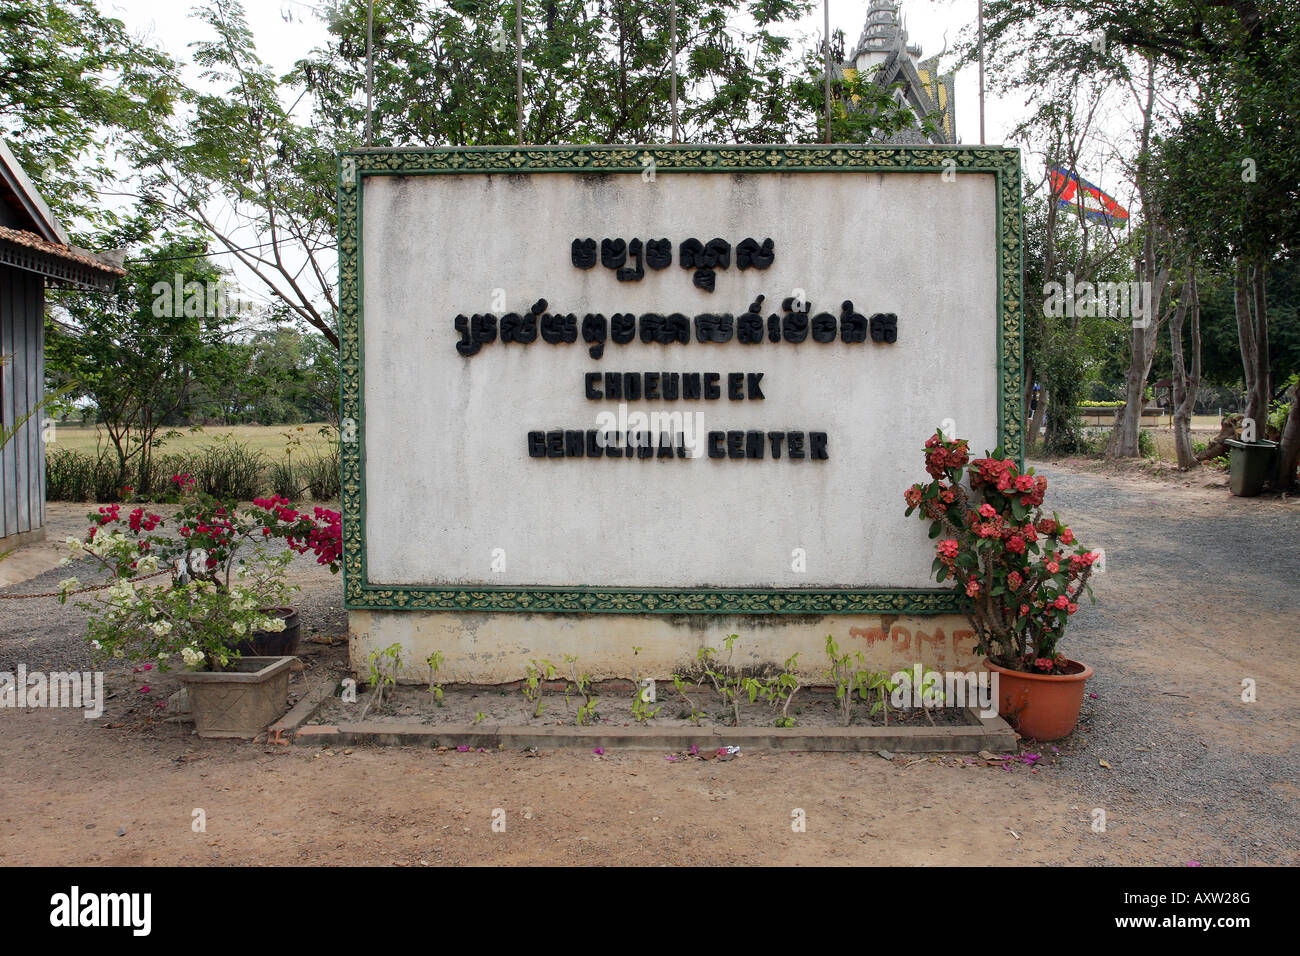 Cheung Ek genocidal center, cambodia Stock Photo